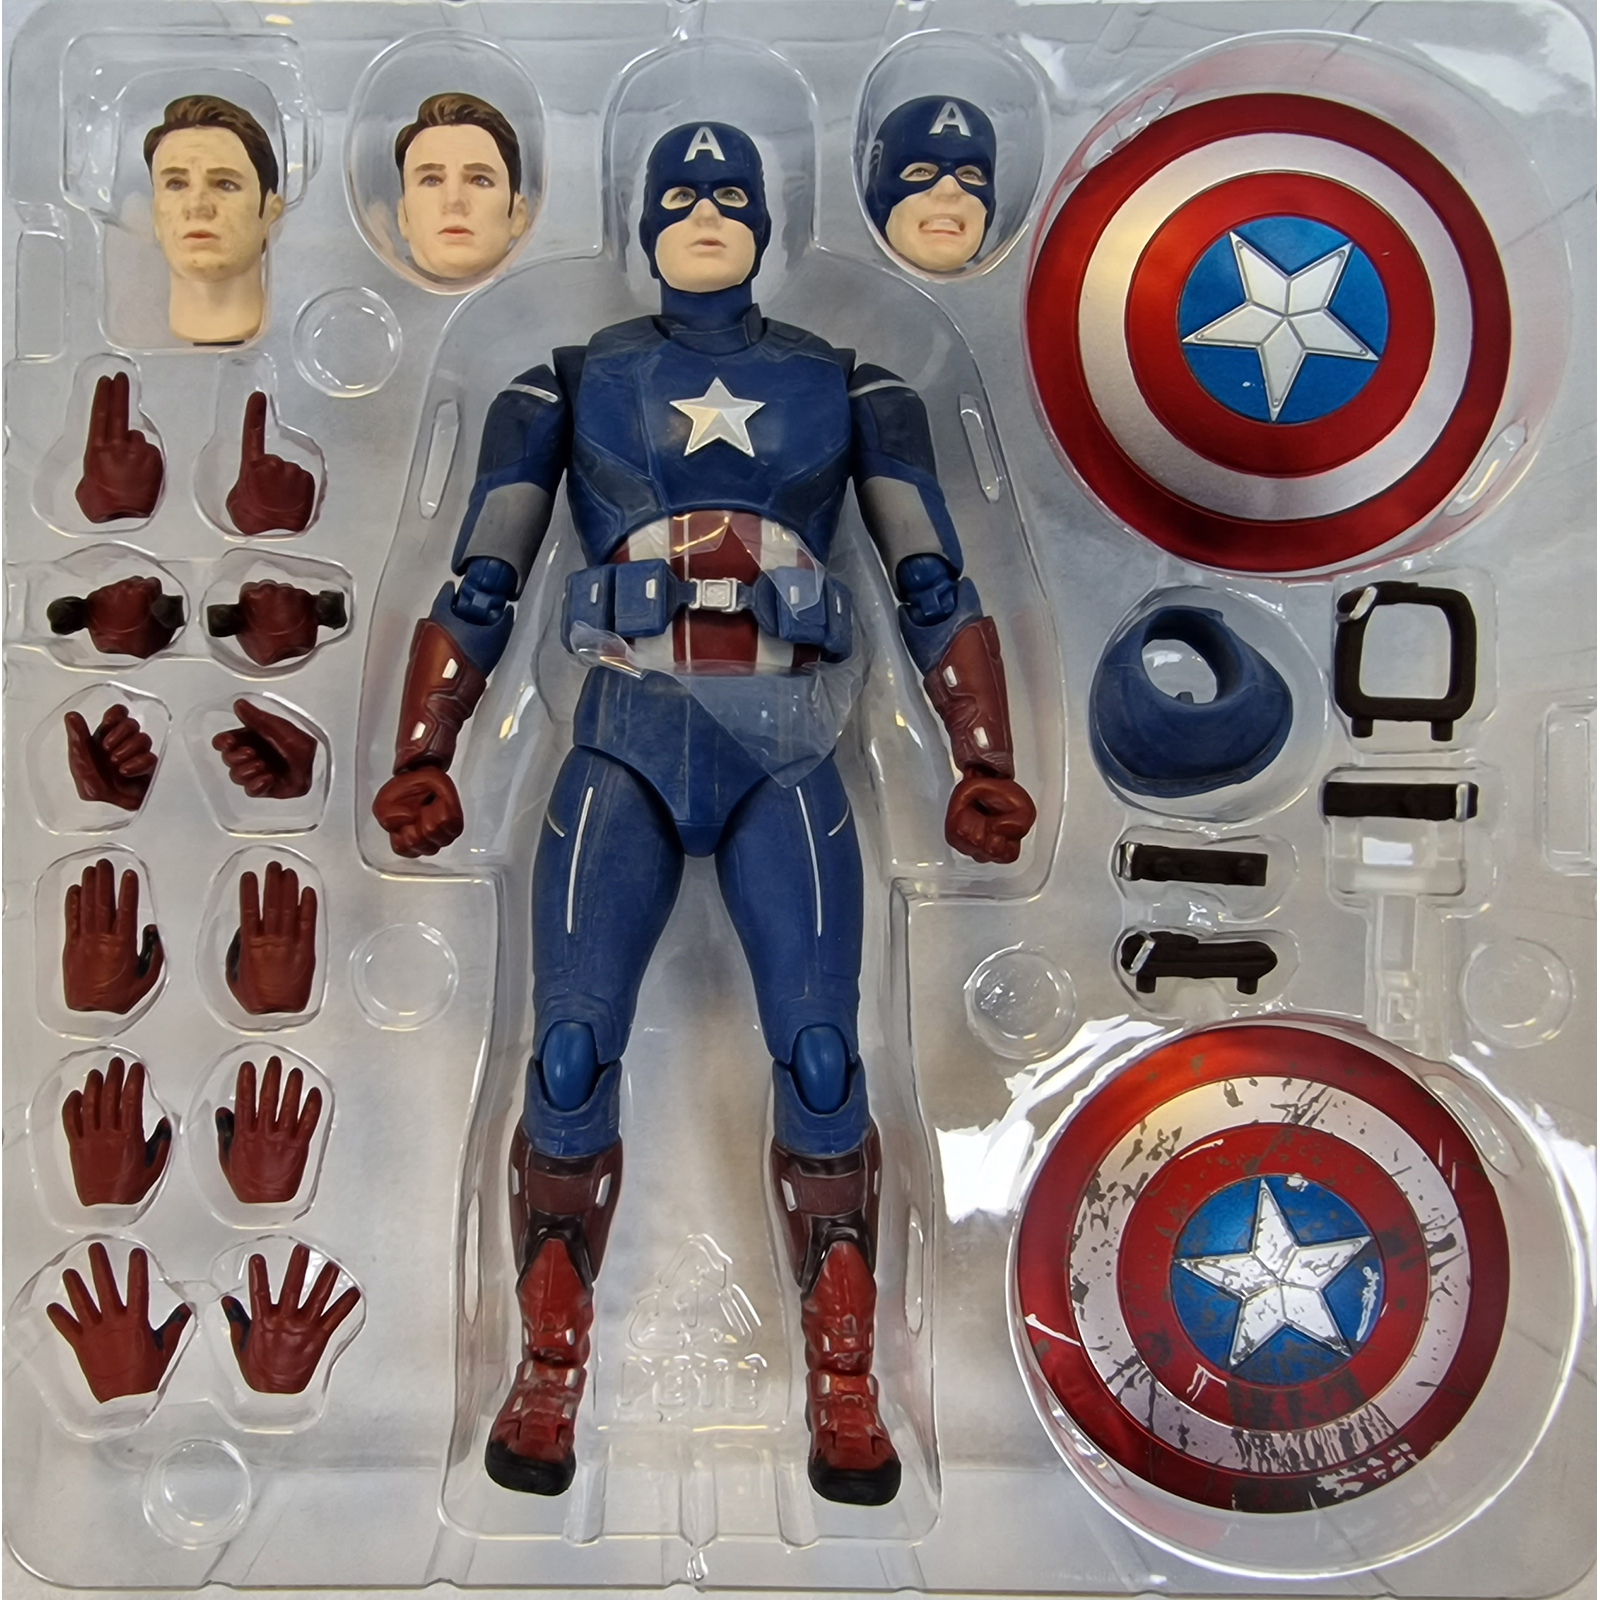 Avengers Captain America Avengers Assemble Edition Figure (Damaged Item)